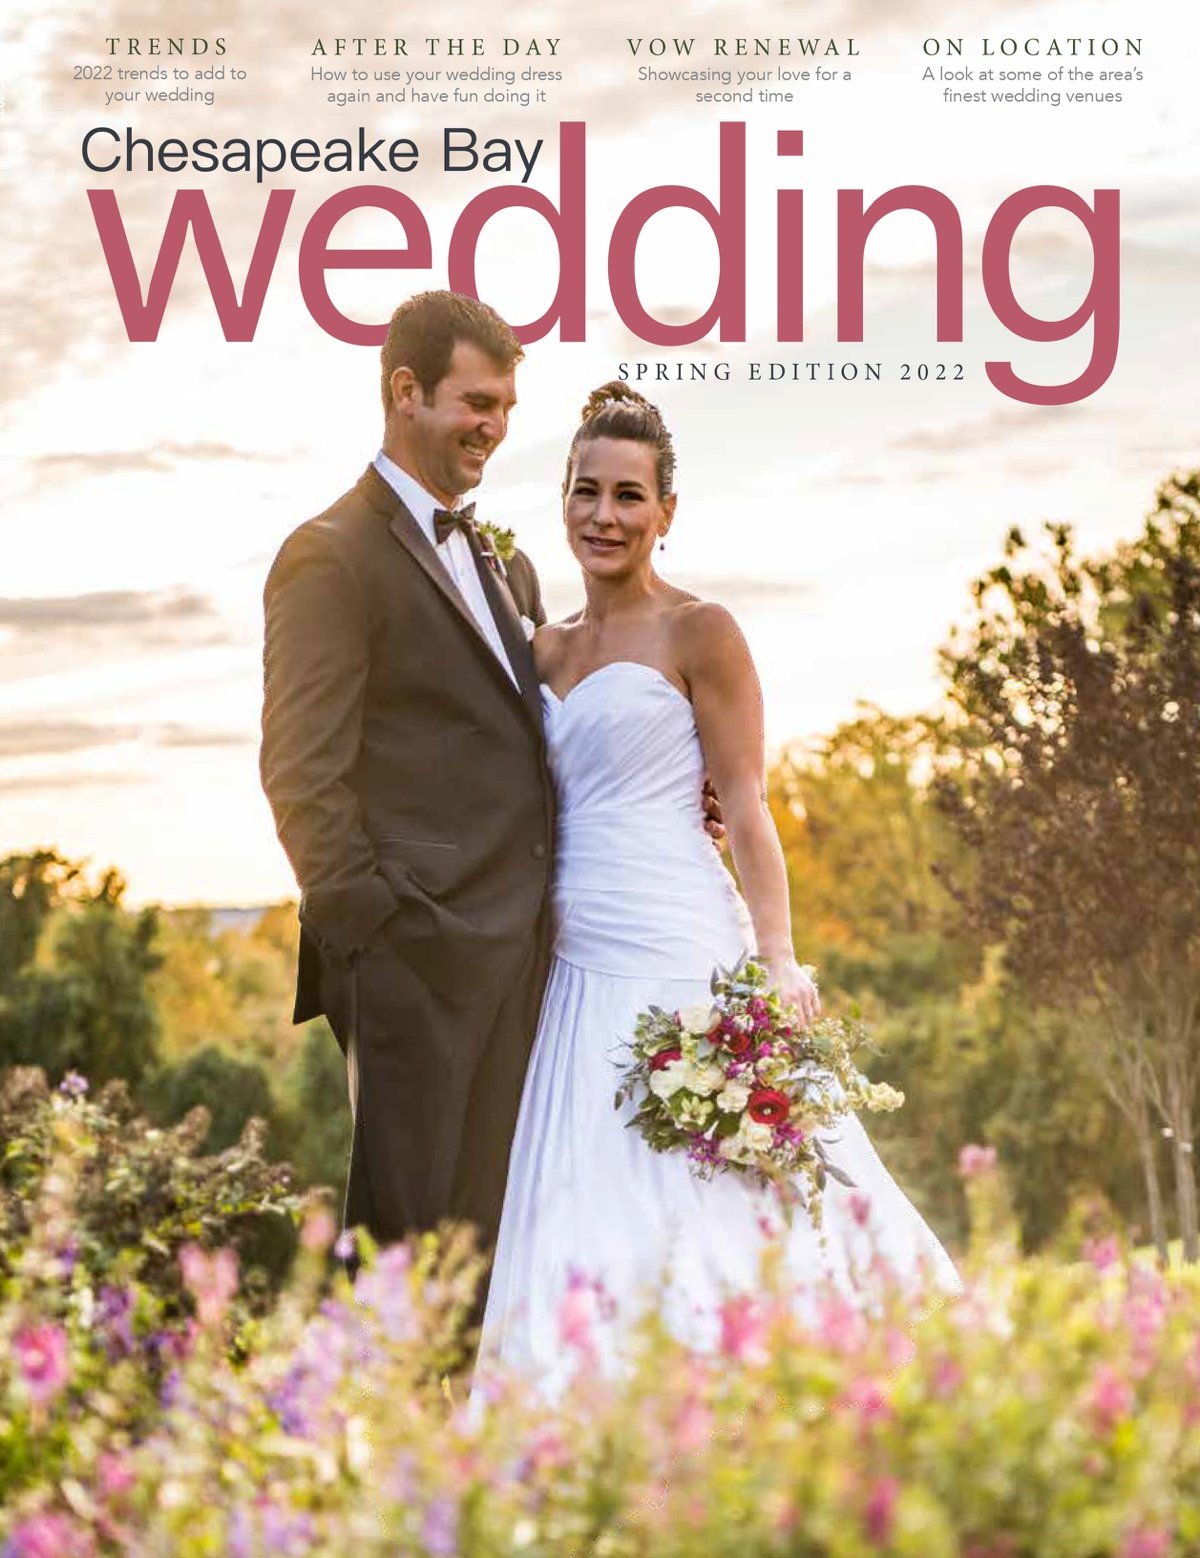 Oxon Hill Manor wedding feature in Chesapeake Bay Wedding magazine